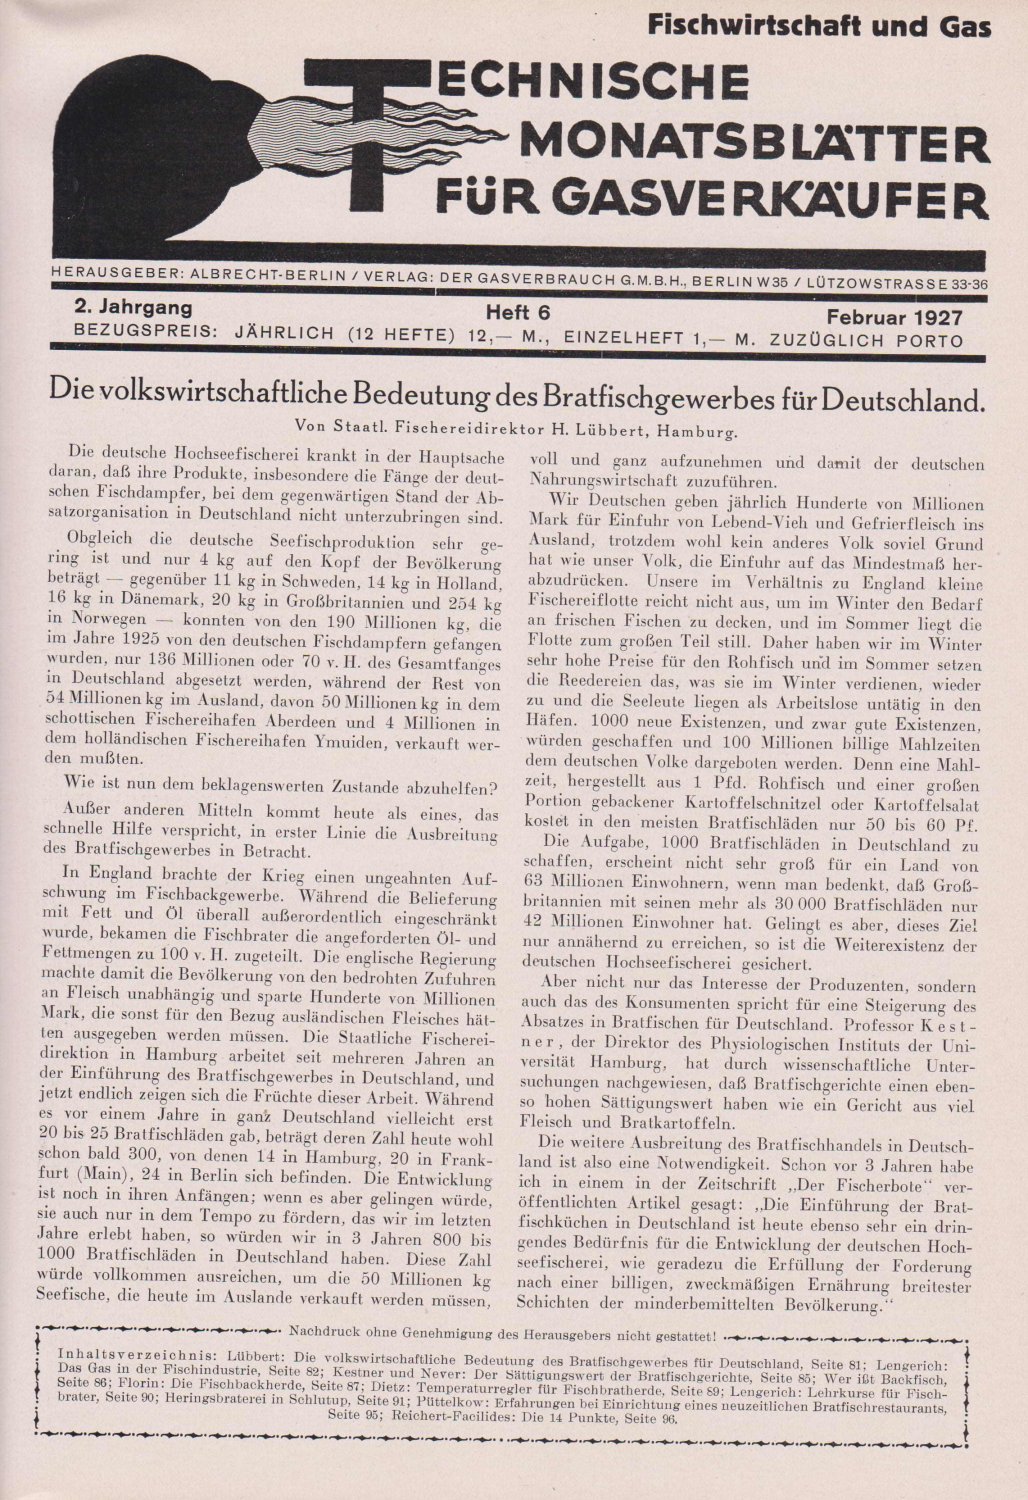 ALBRECHT-Berlin (Hrsg.):  Technische Monatsblätter für Gasverkäufer. Jahrgang 1926/27. 